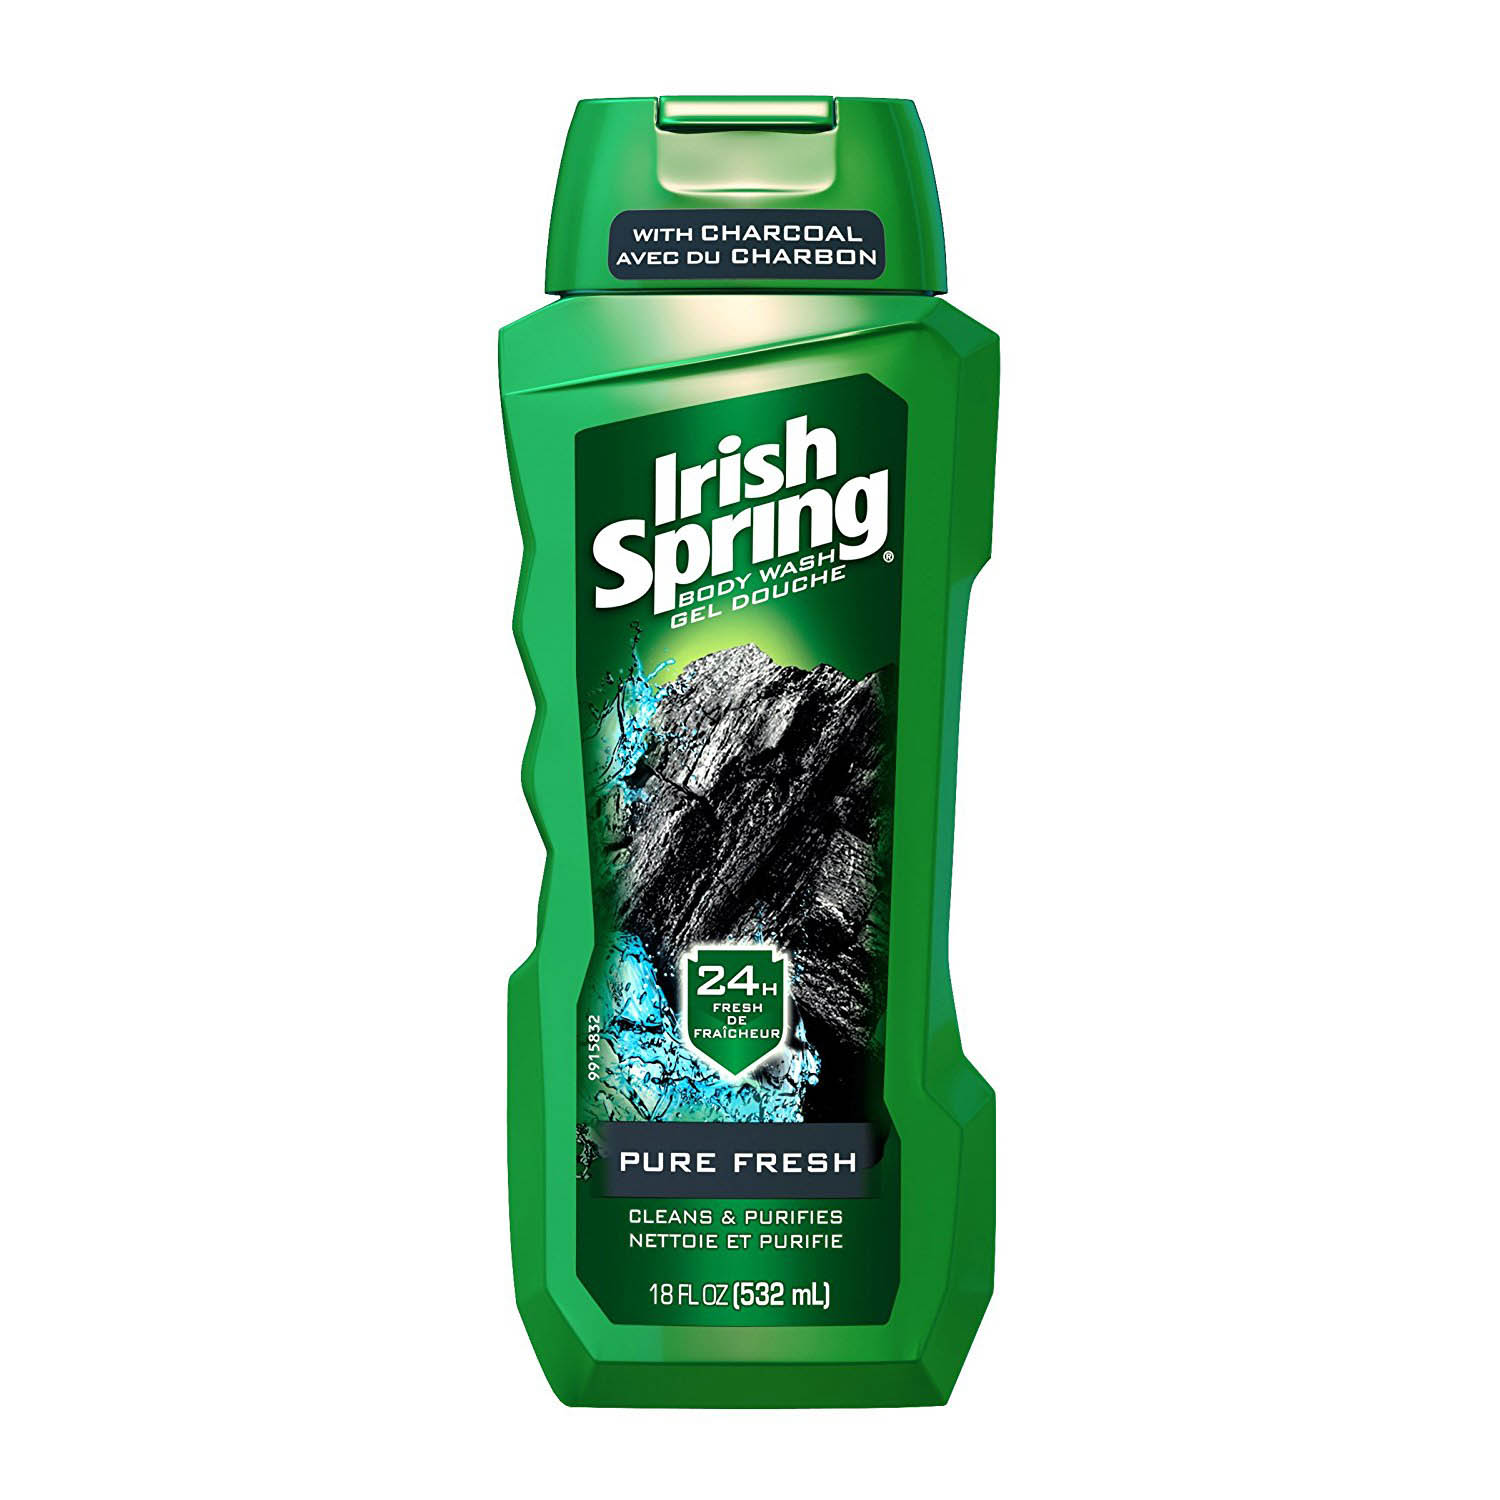 buy-irish-spring-body-wash-pure-fresh-with-charcoal-532ml-18oz